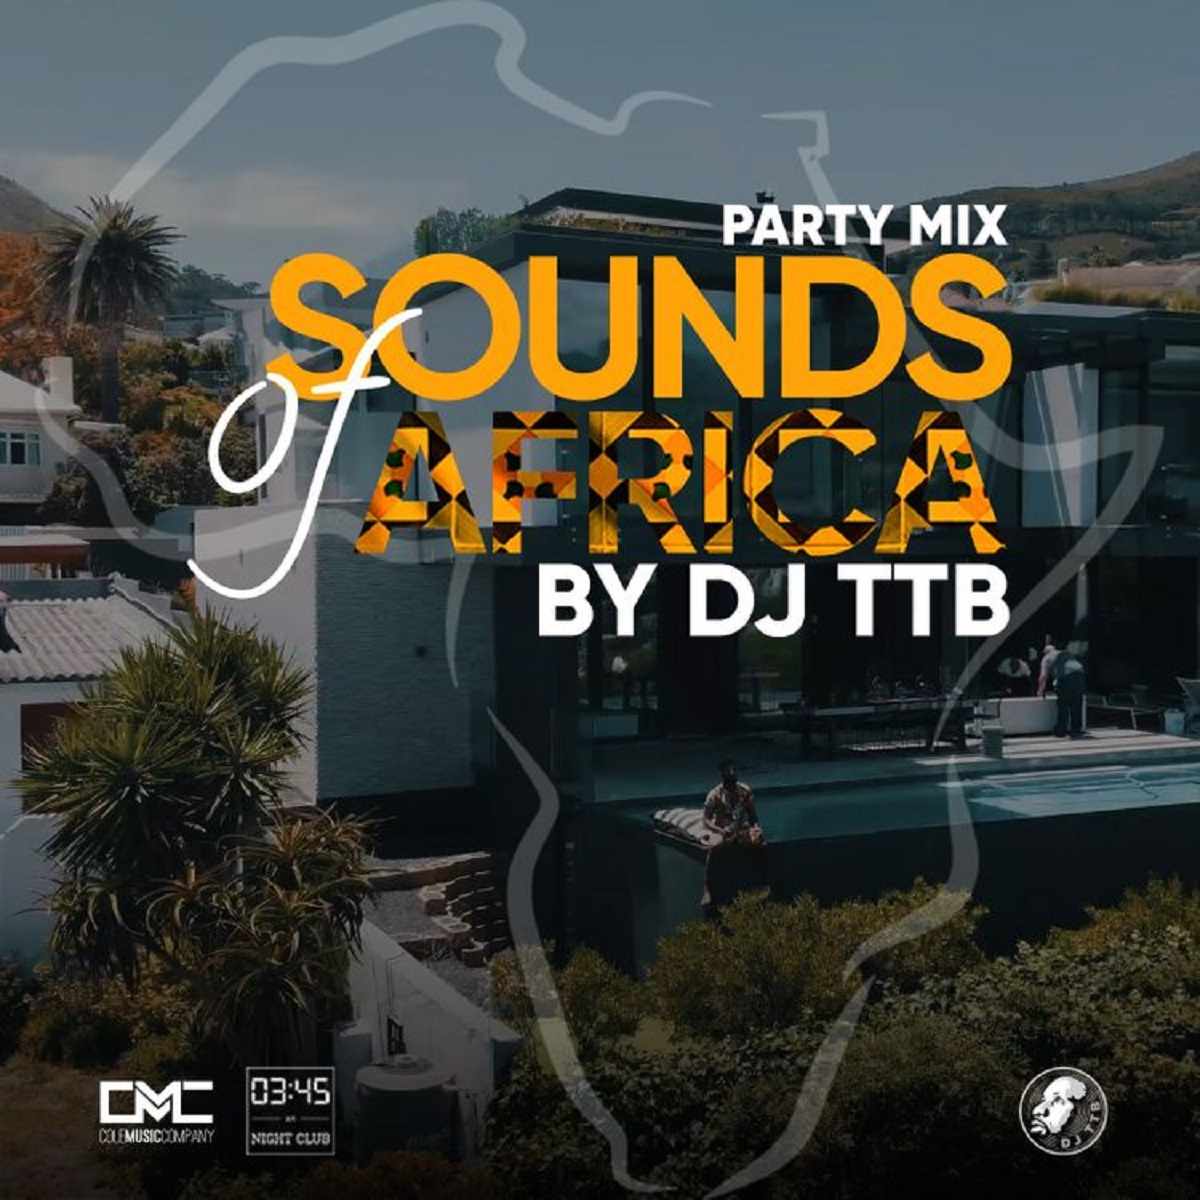 Dj Ttb Sound Of Africa Party Mix